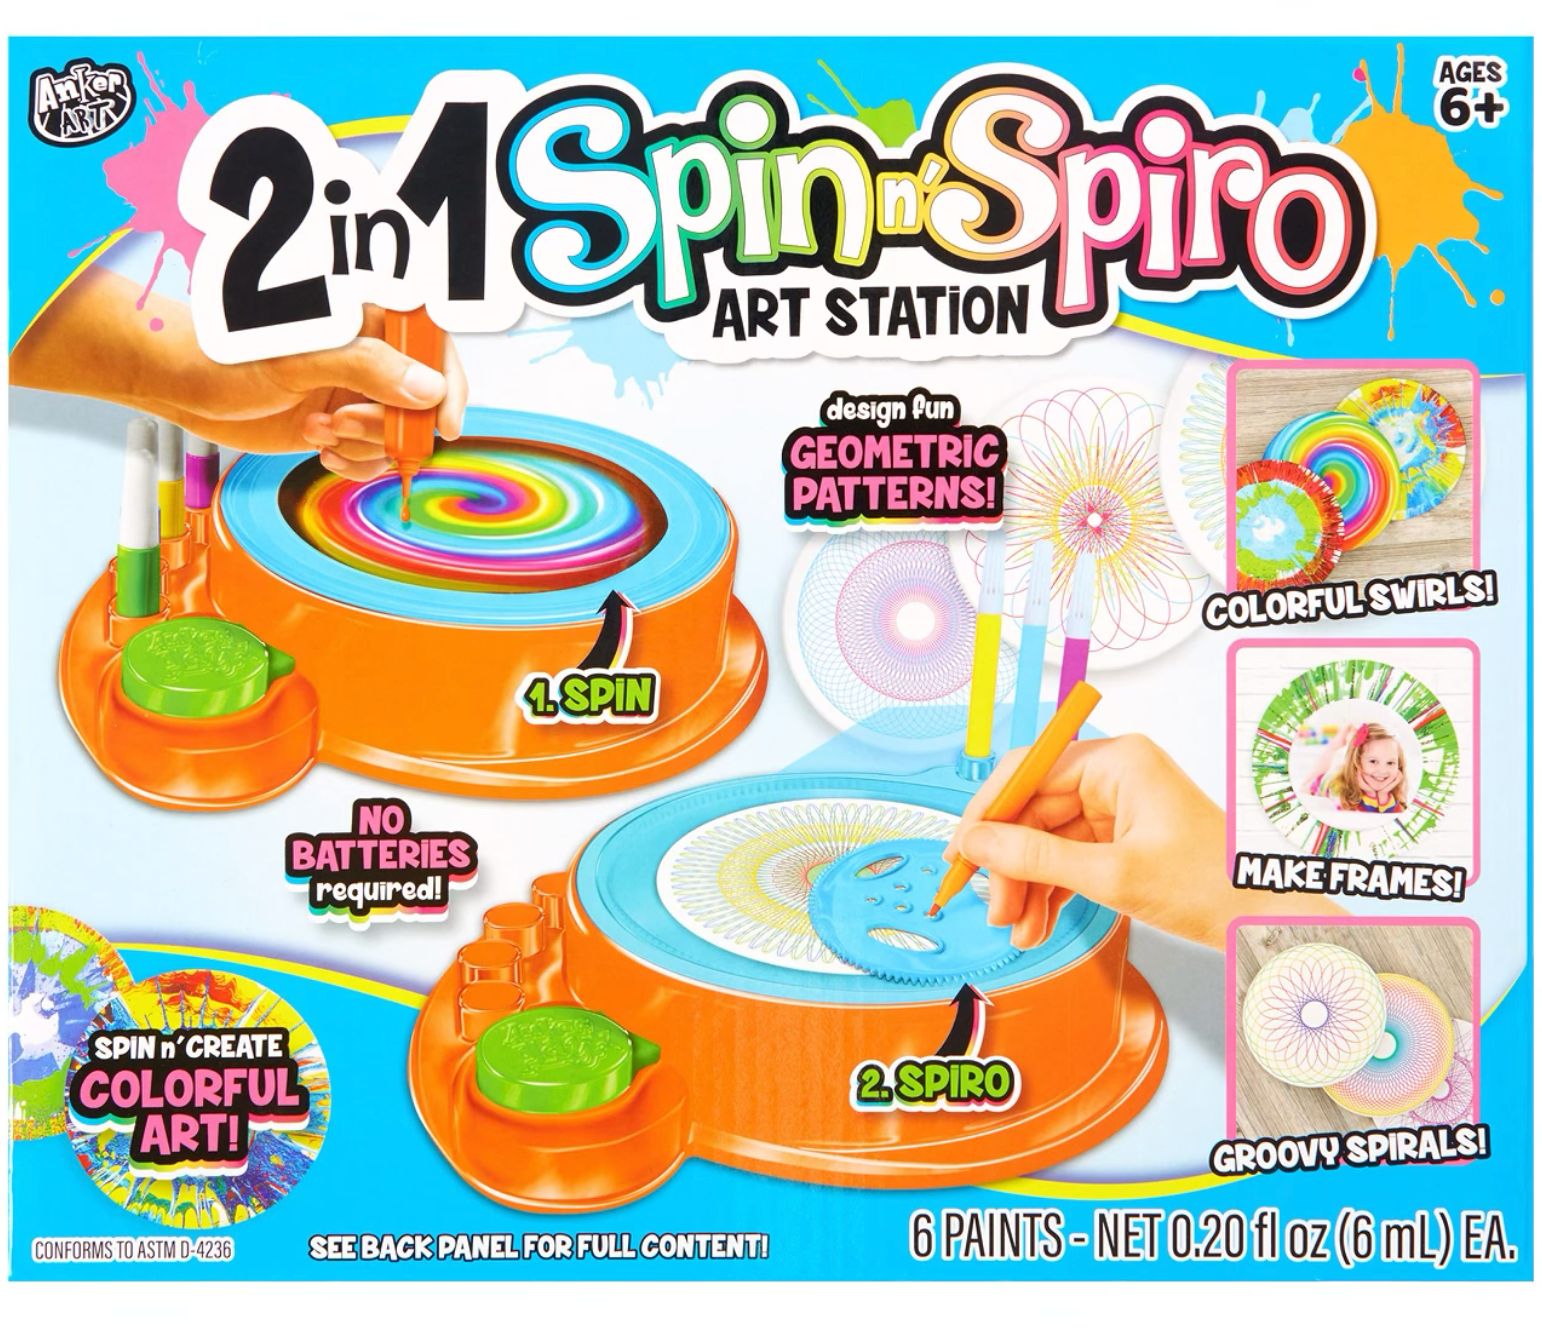 2in1 Spin N' Spiro Art Station